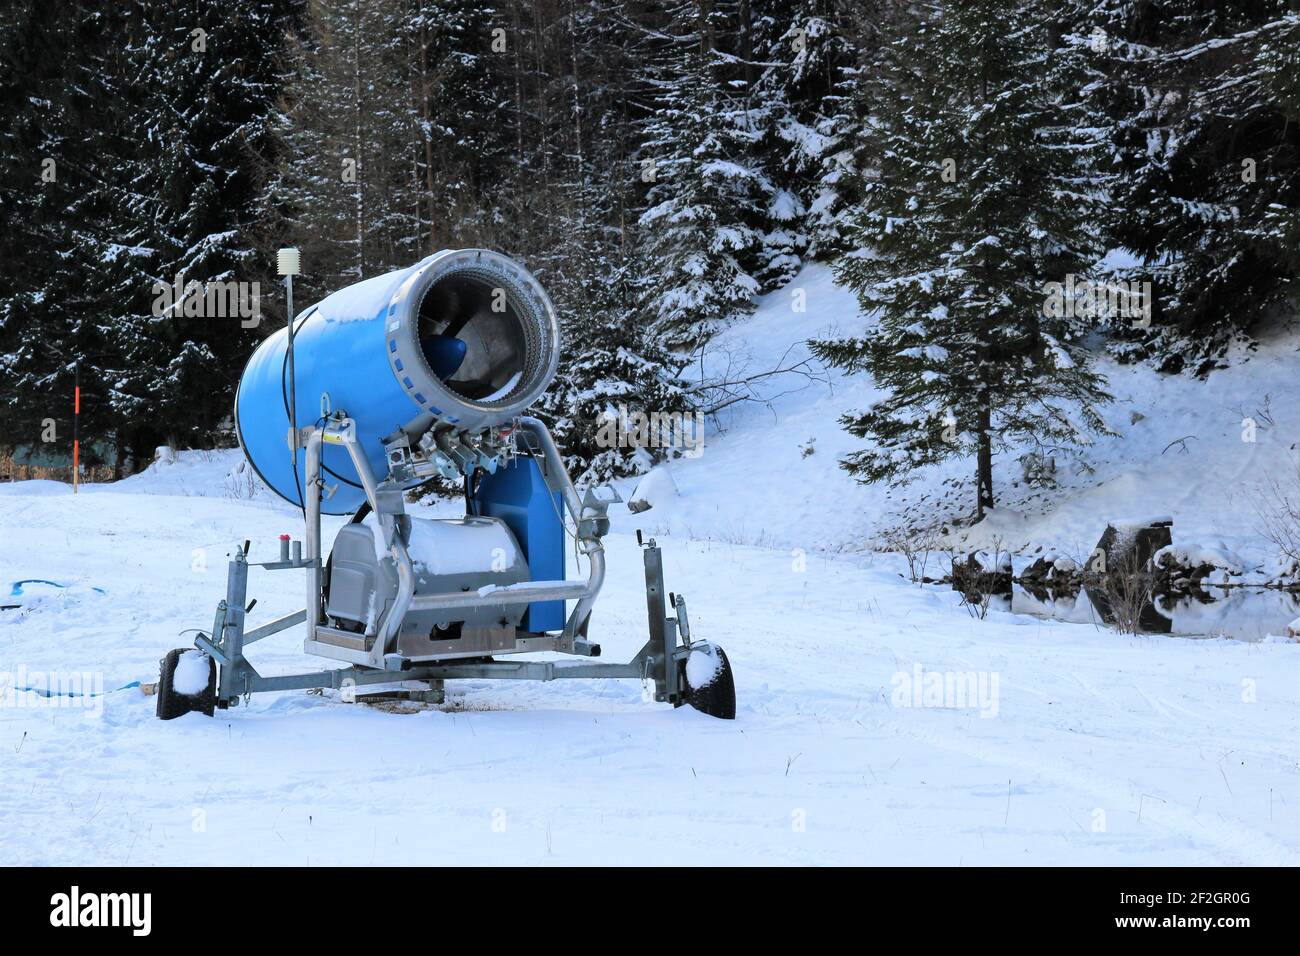 https://c8.alamy.com/comp/2F2GR0G/walk-in-the-riedboden-near-mittenwald-europe-germany-bavaria-upper-bavaria-werdenfelser-land-winter-forest-snow-cannon-2F2GR0G.jpg